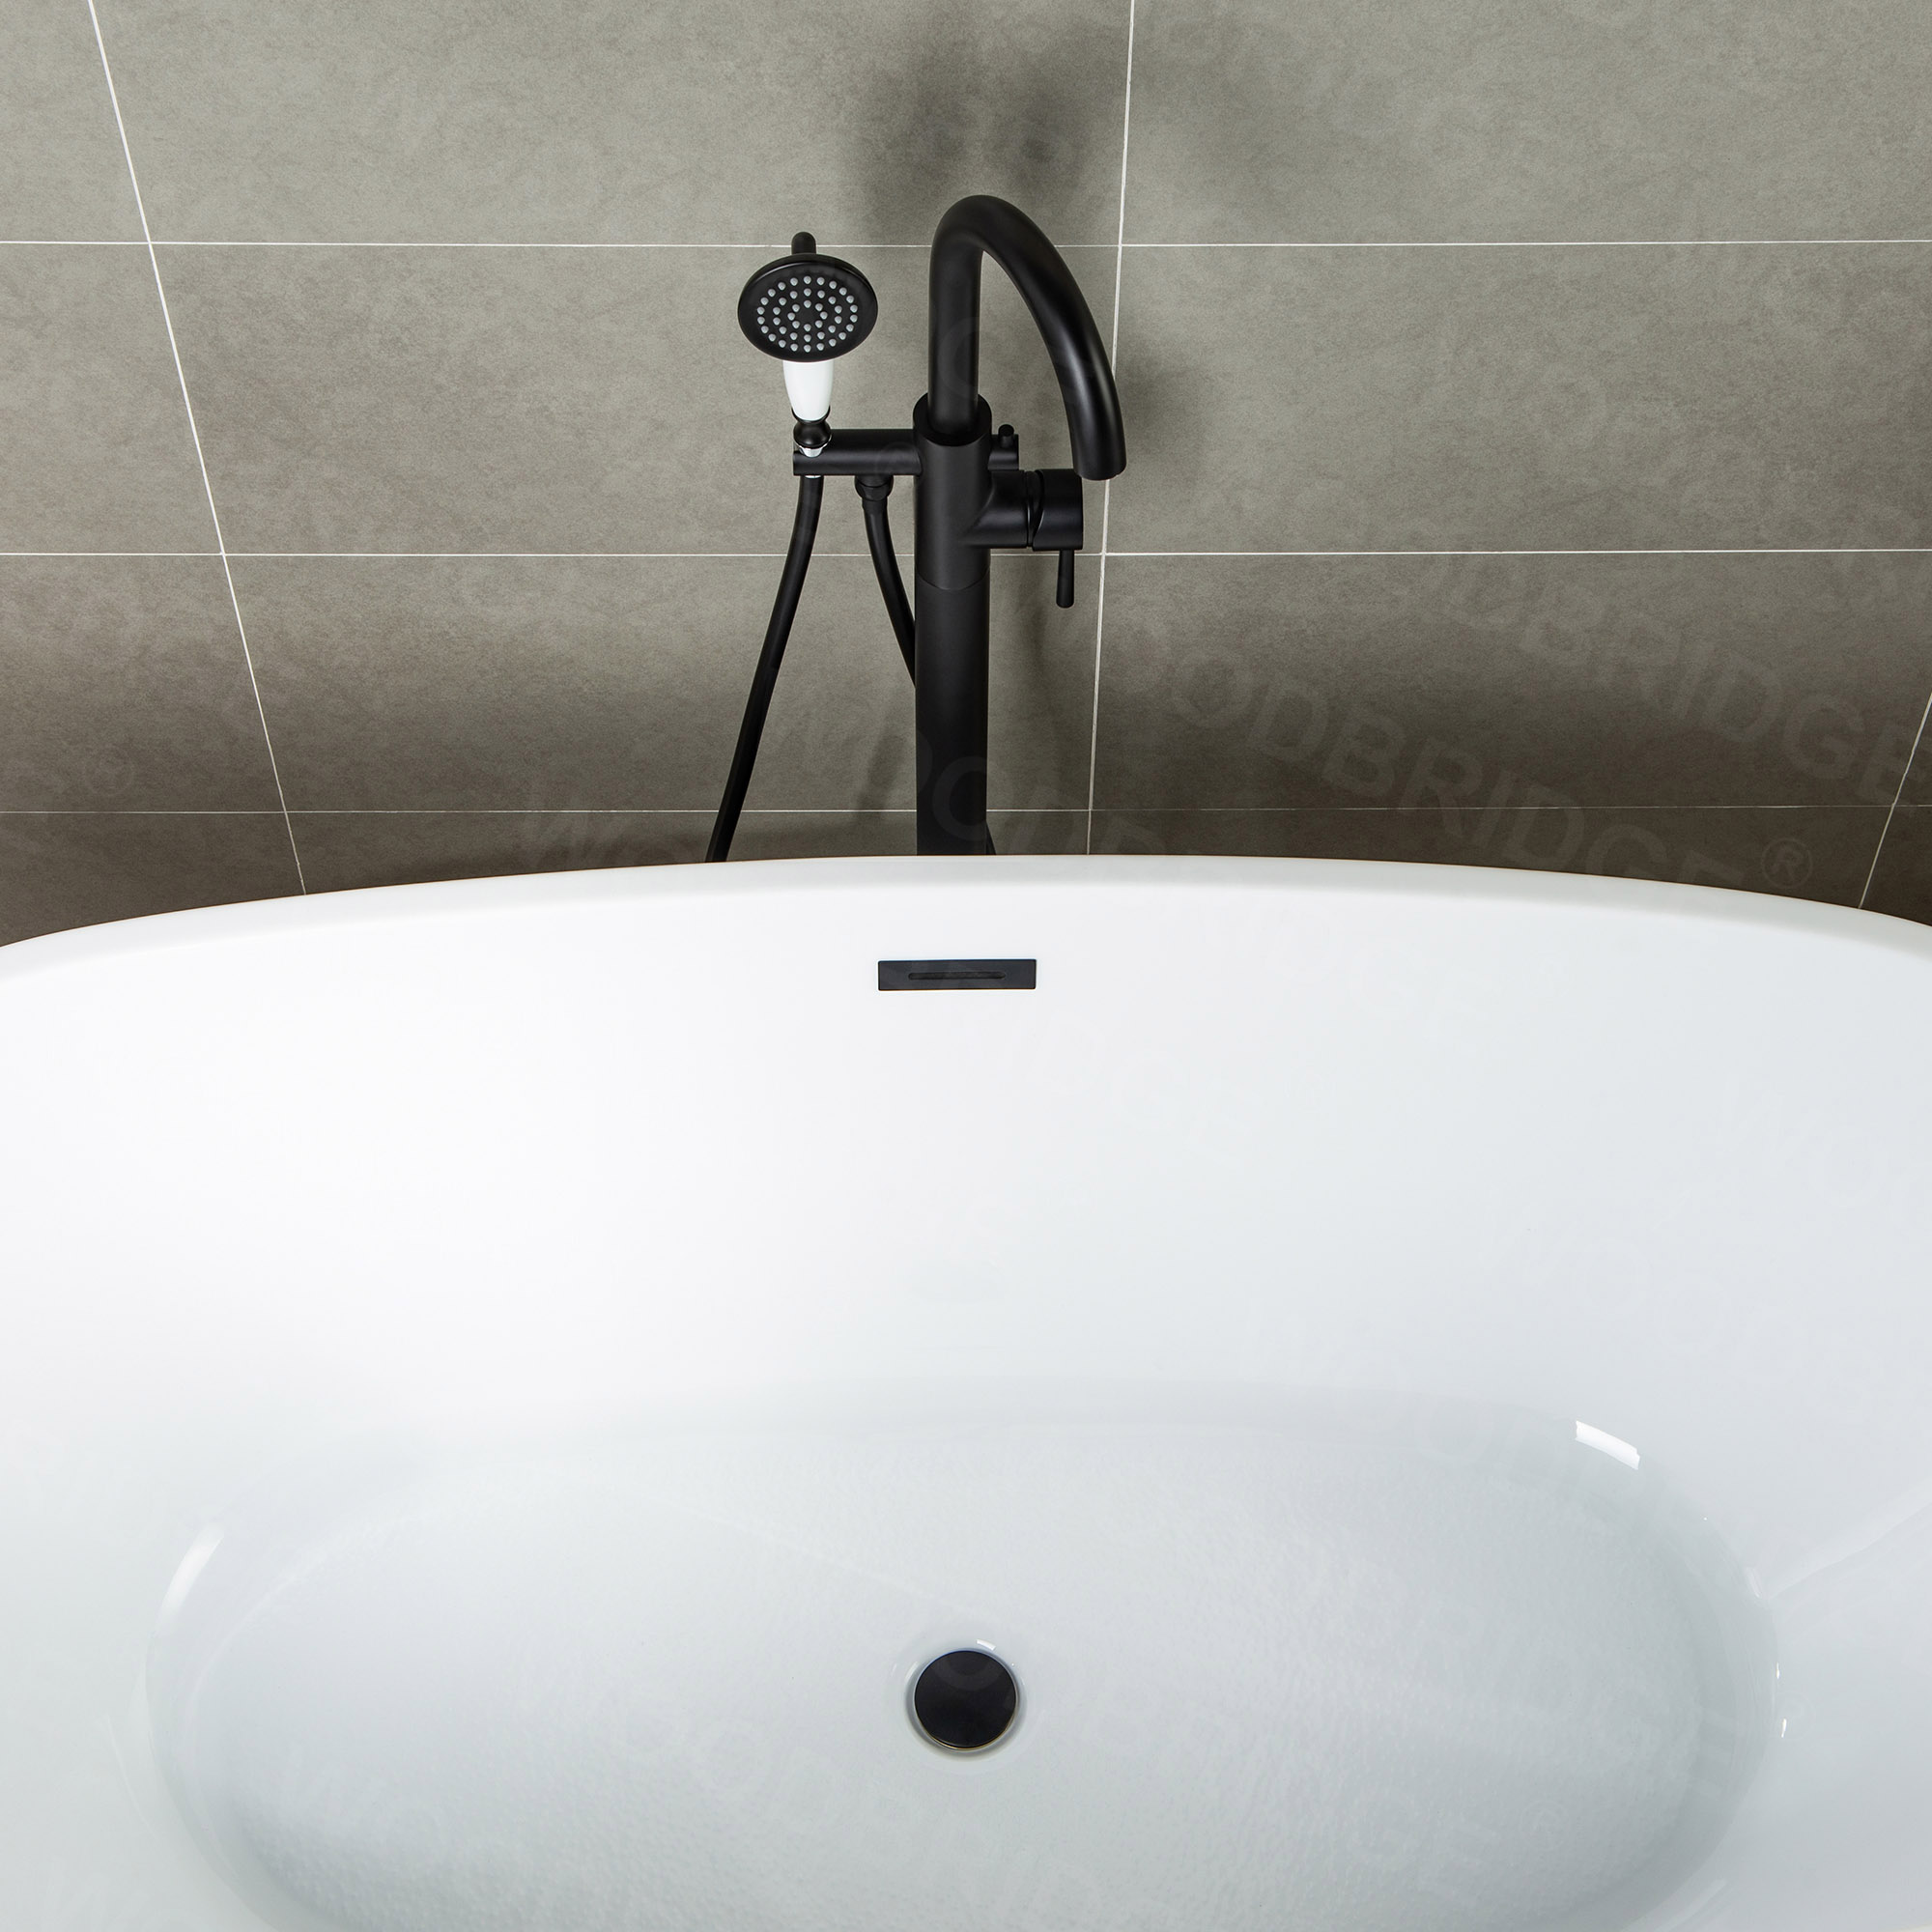  WOODBRIDGE F0006MBVT Fusion Single Handle Floor Mount Freestanding Tub Filler Faucet with Telephone Hand shower in Matte Black Finish._14870